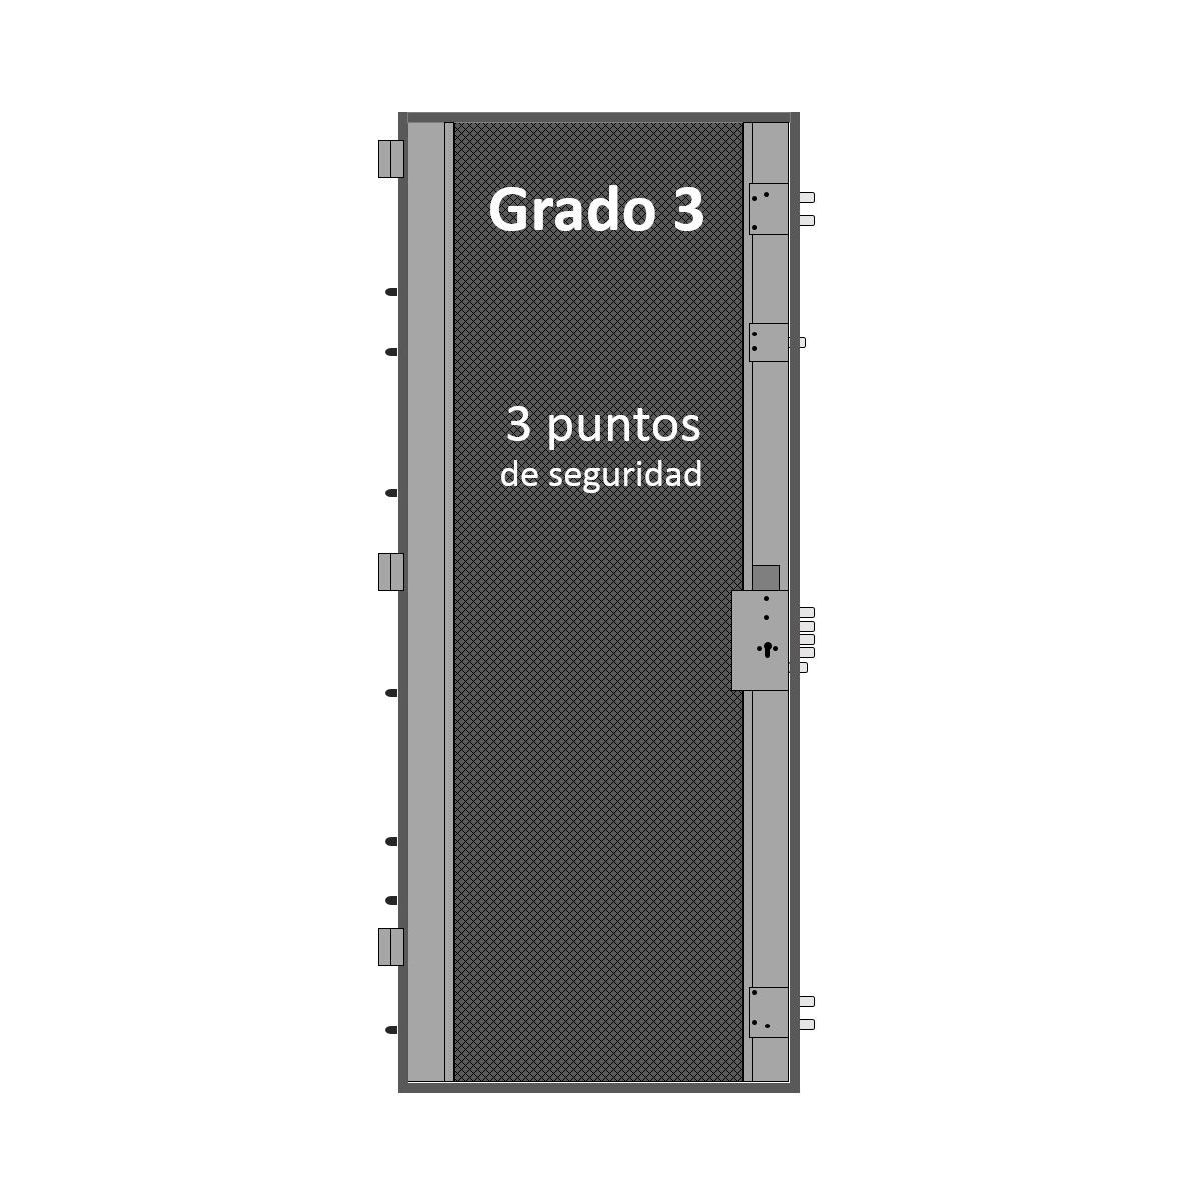 Puertas acorazadas Serie Omega Cearco - Puerta Acorazada 90cm grado 3 Alborán Omega